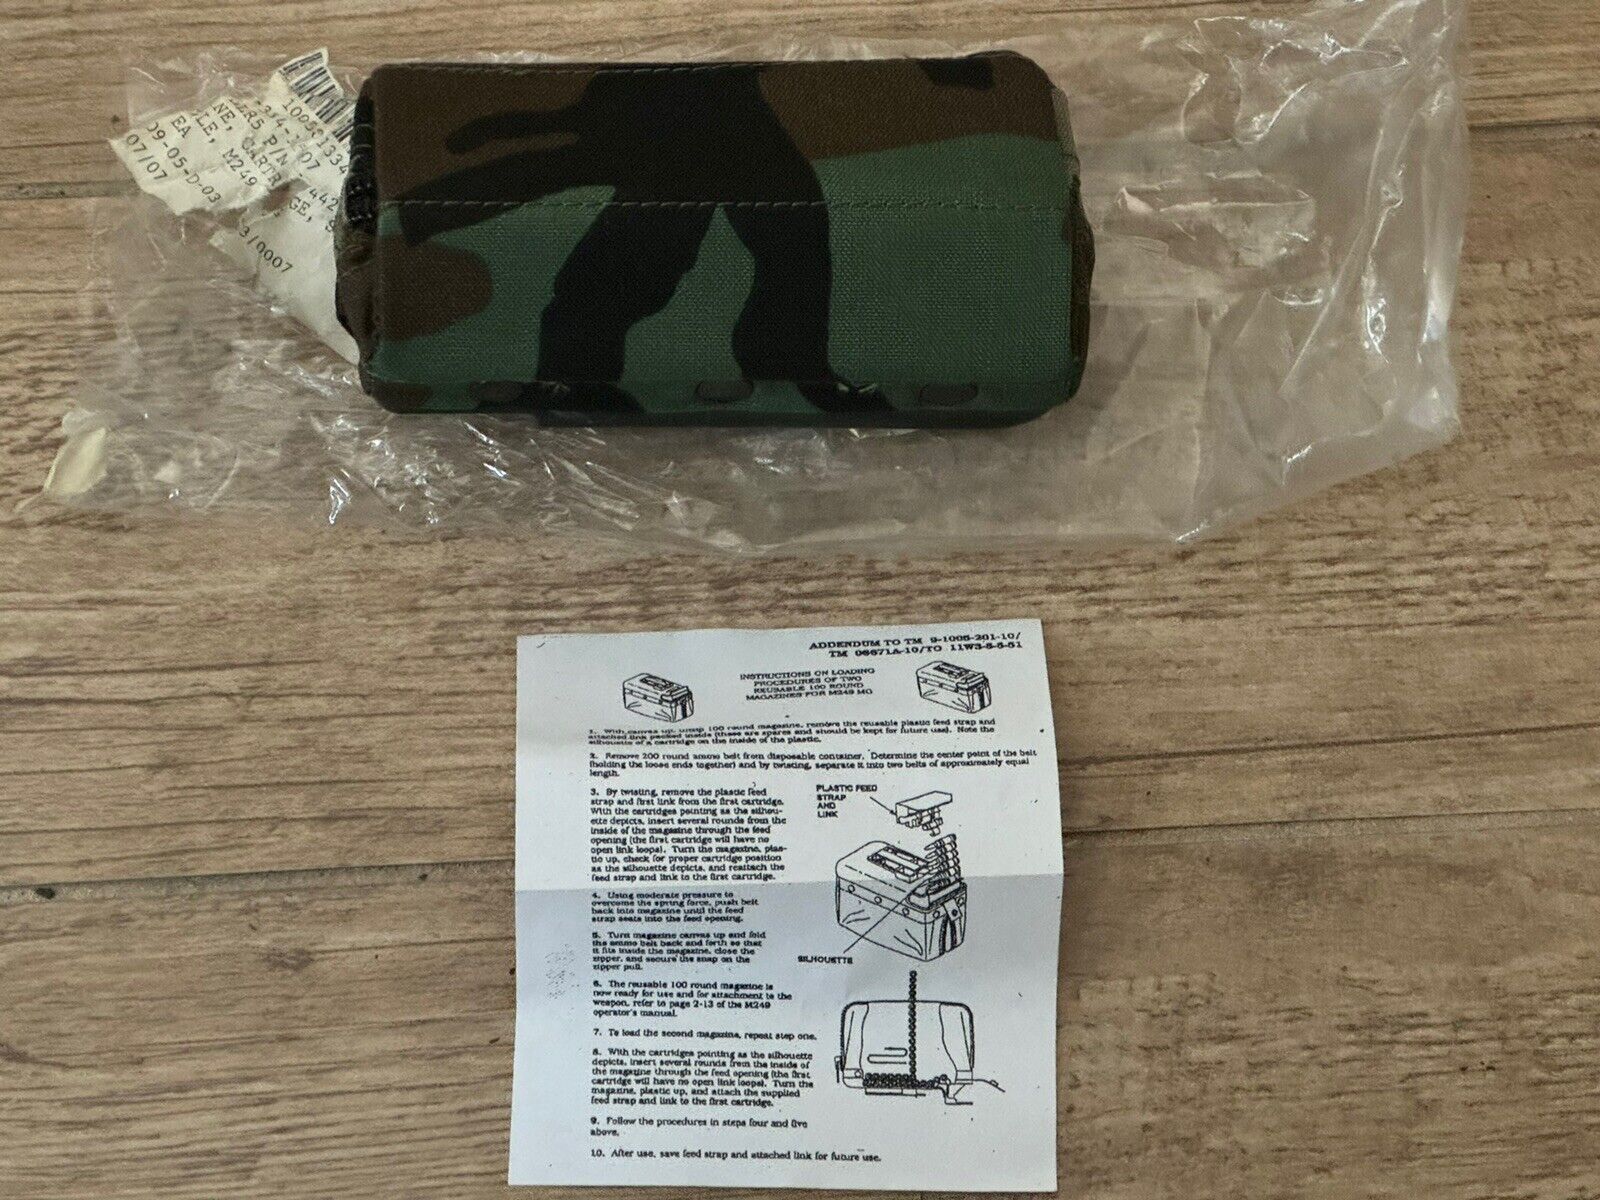 Army Magazine Mag Pouch Bag TM 9-1005-201-10